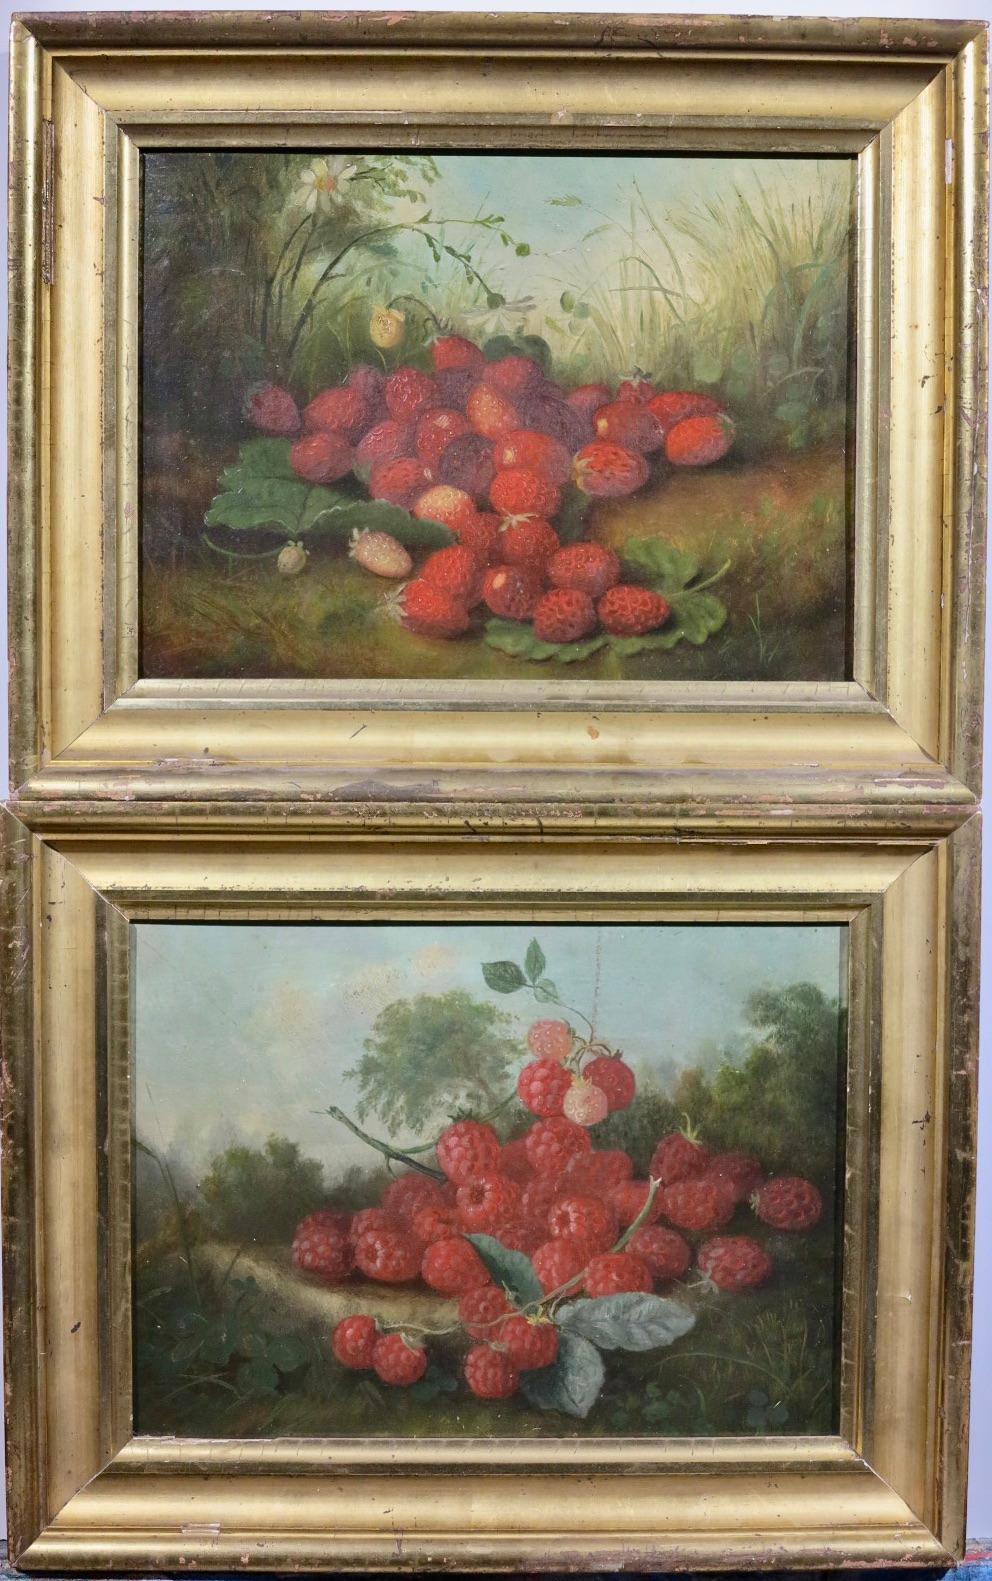 Unknown Landscape Painting - Hudson River School era fruit still life landscape paintings